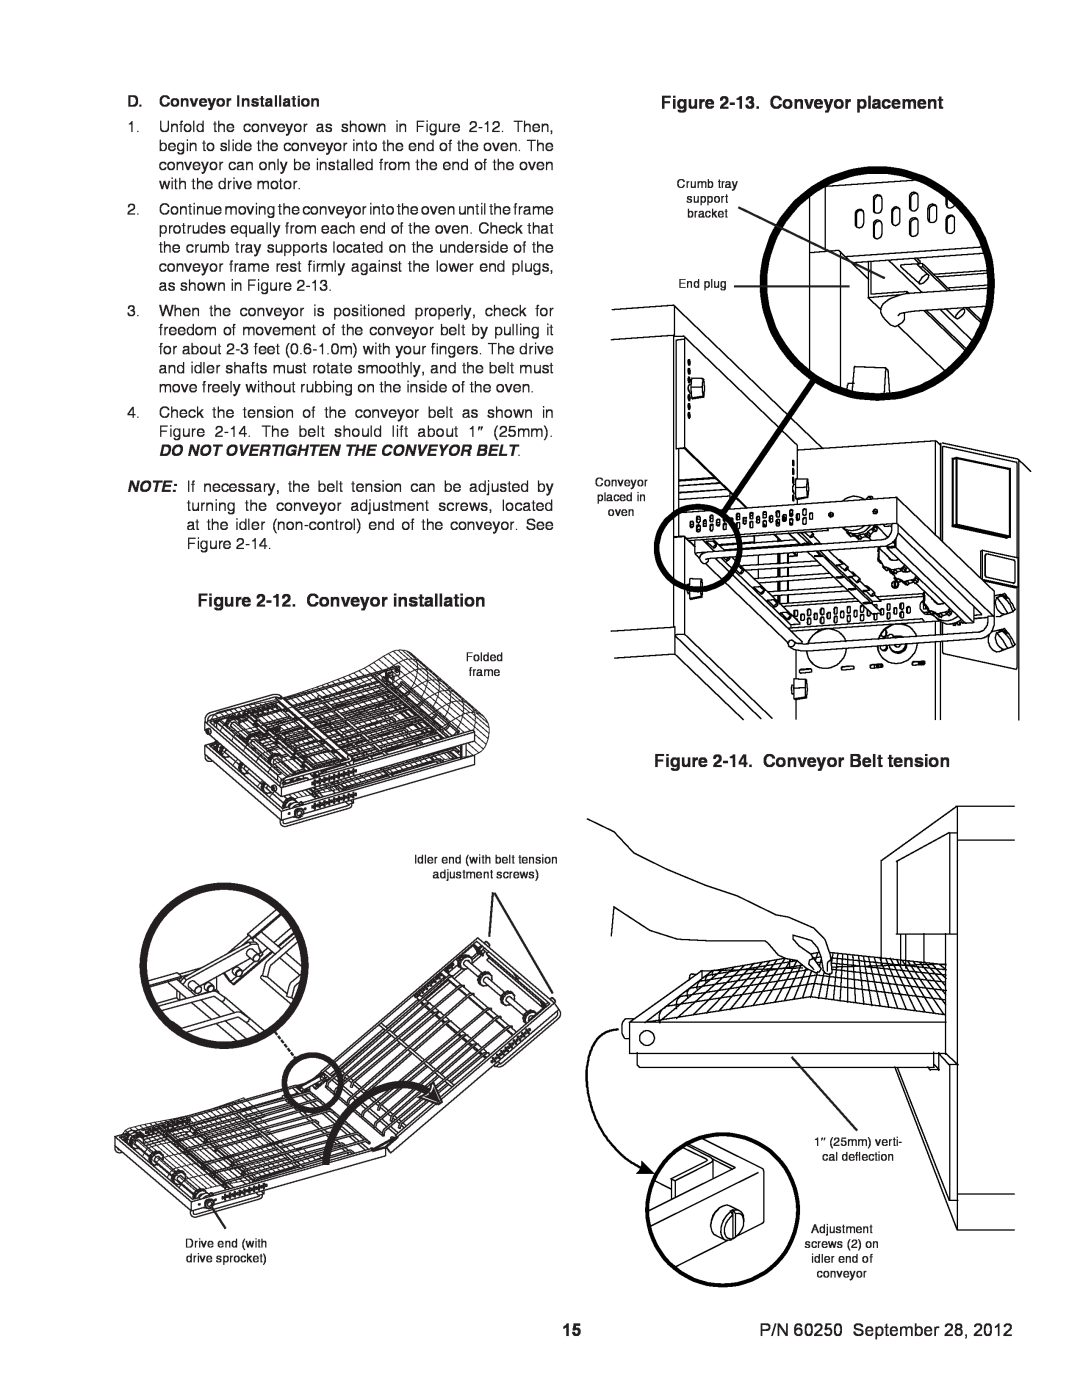 Middleby Marshall P/N 60250 12. Conveyor installation, 13. Conveyor placement, 14. Conveyor Belt tension 